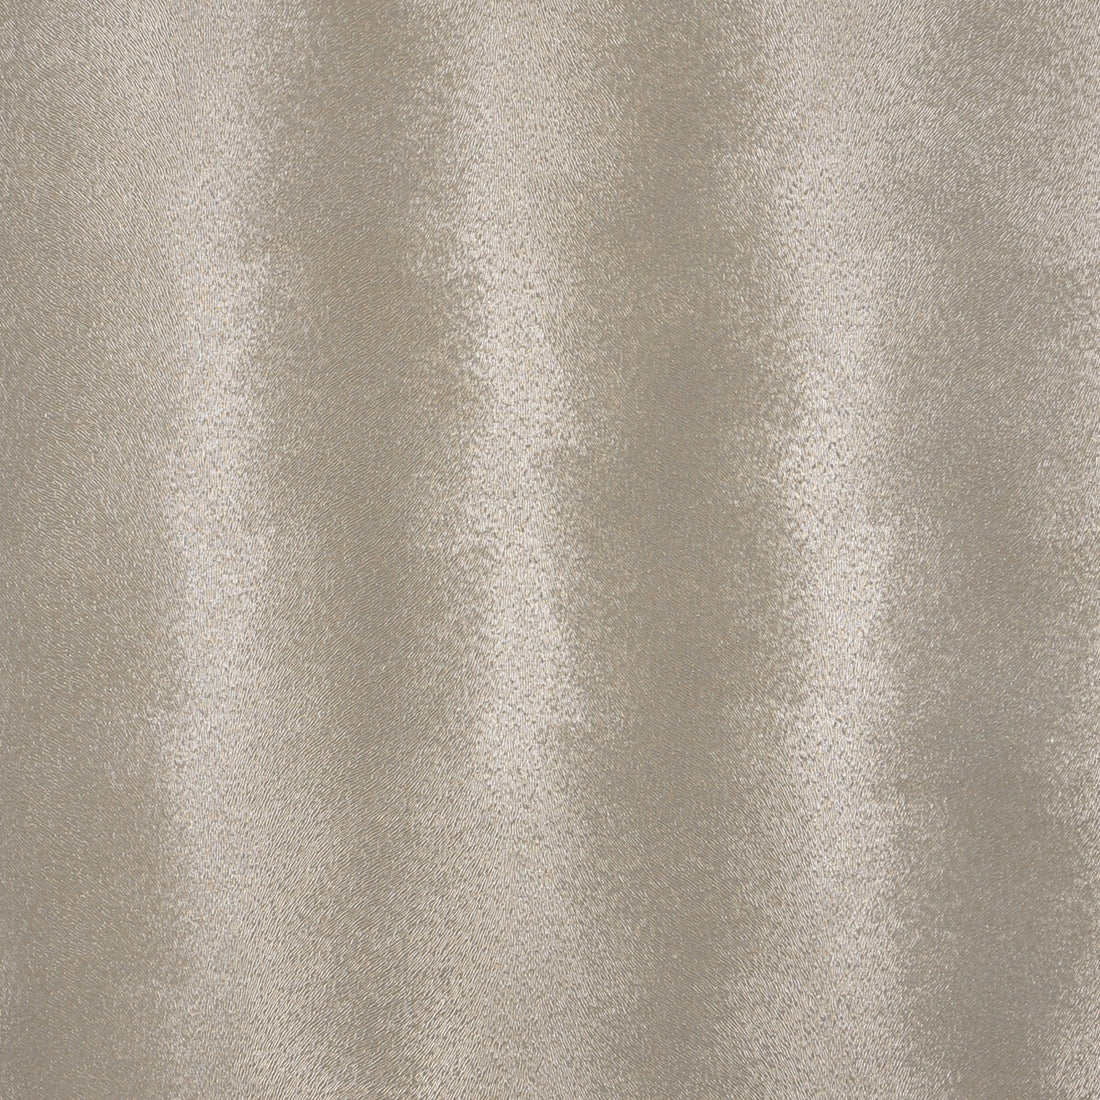 Kravet Design fabric in light year-11 color - pattern LIGHT YEAR.11.0 - by Kravet Design